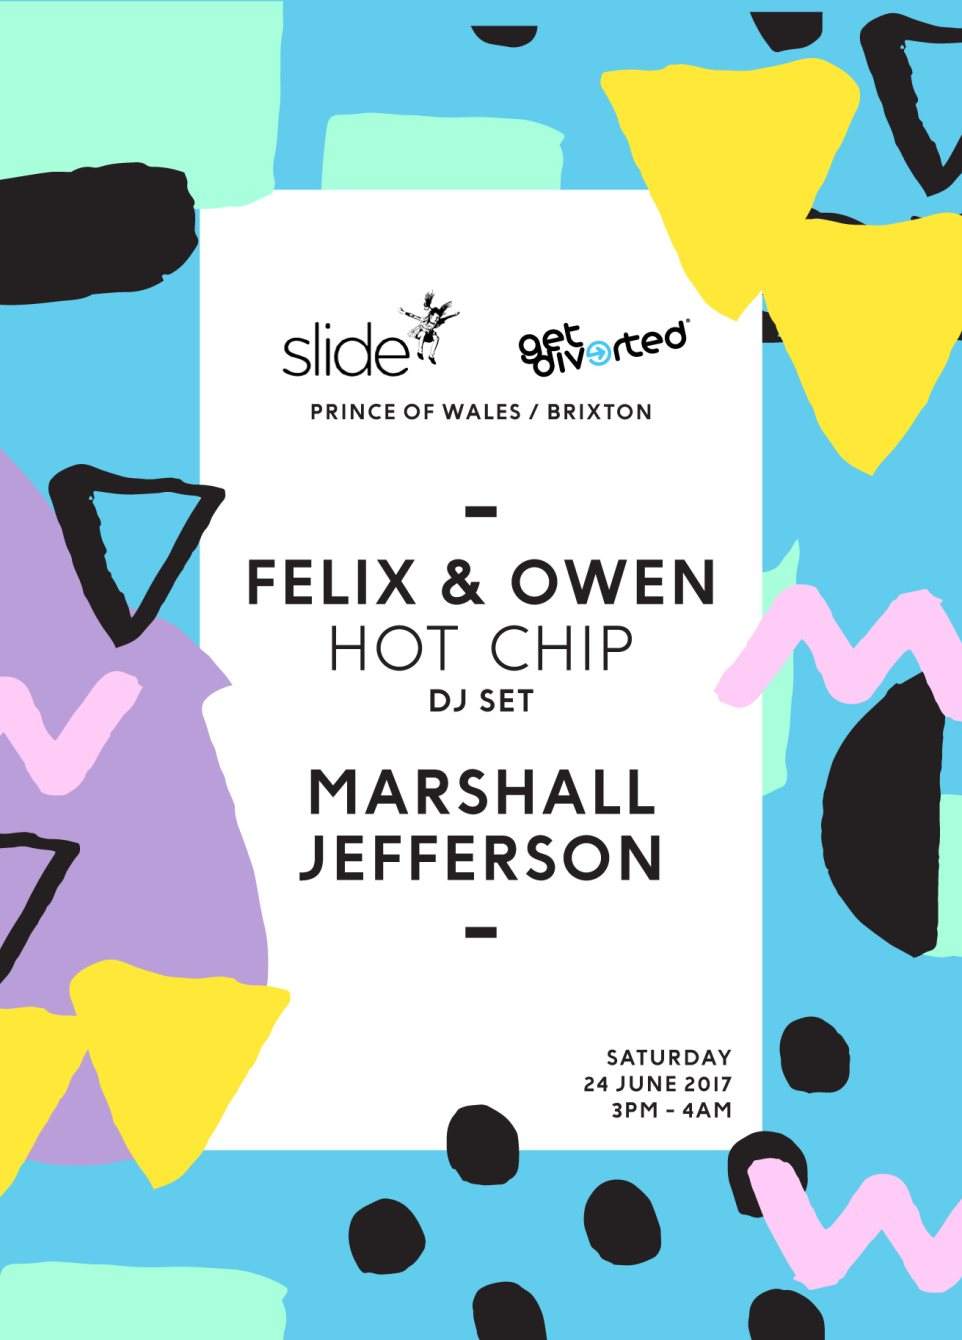 Slide & Get Diverted with Felix & Owen Hot Chip DJ set & Marshall Jefferson - フライヤー表